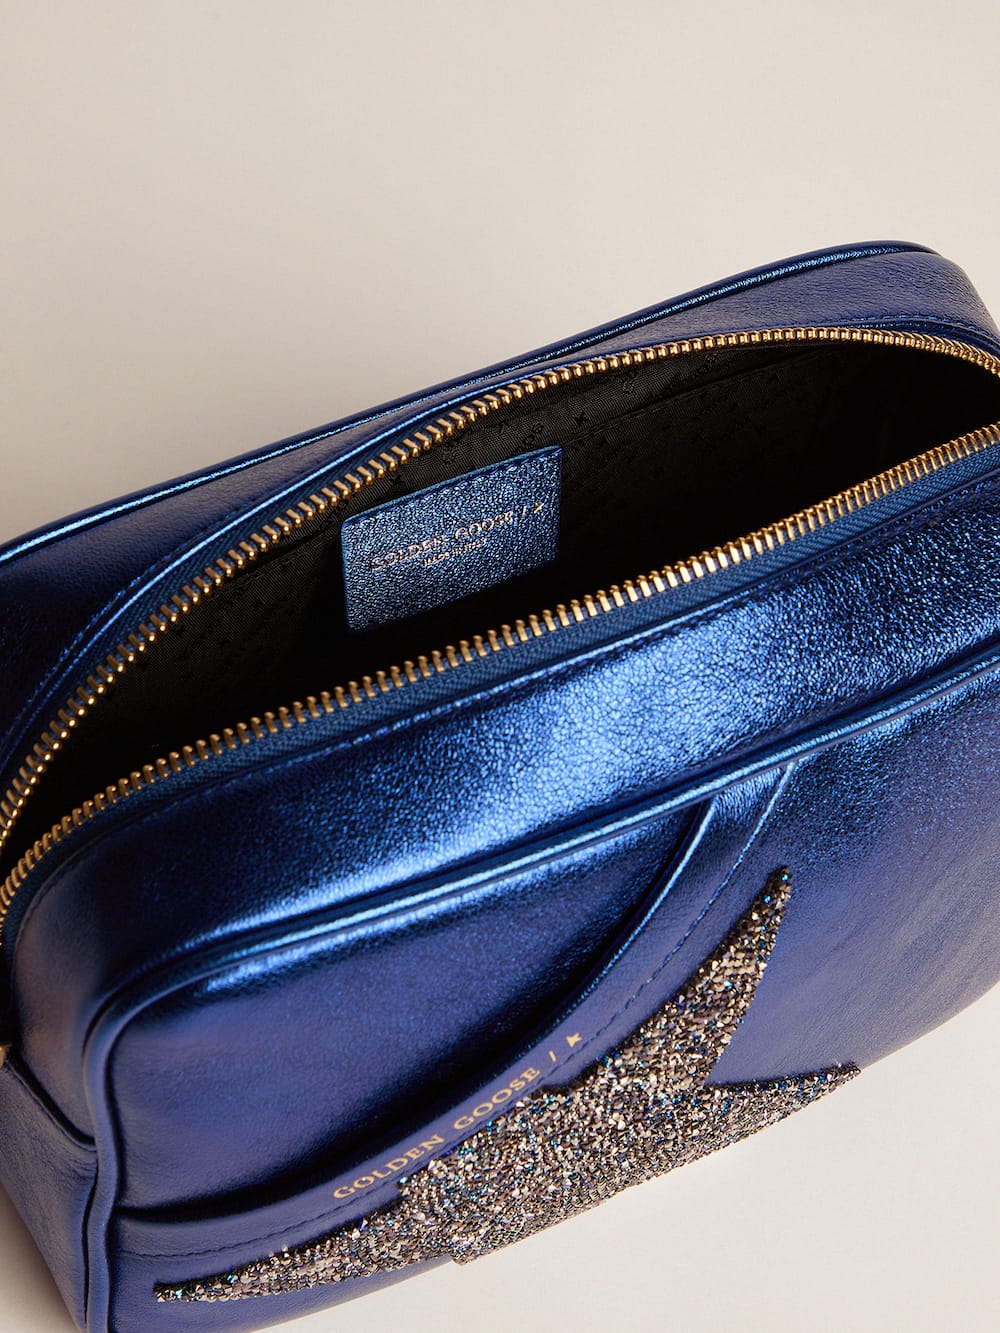 Golden Goose - Bolso Star Bag de piel laminada azul con estrella Swarovski in 